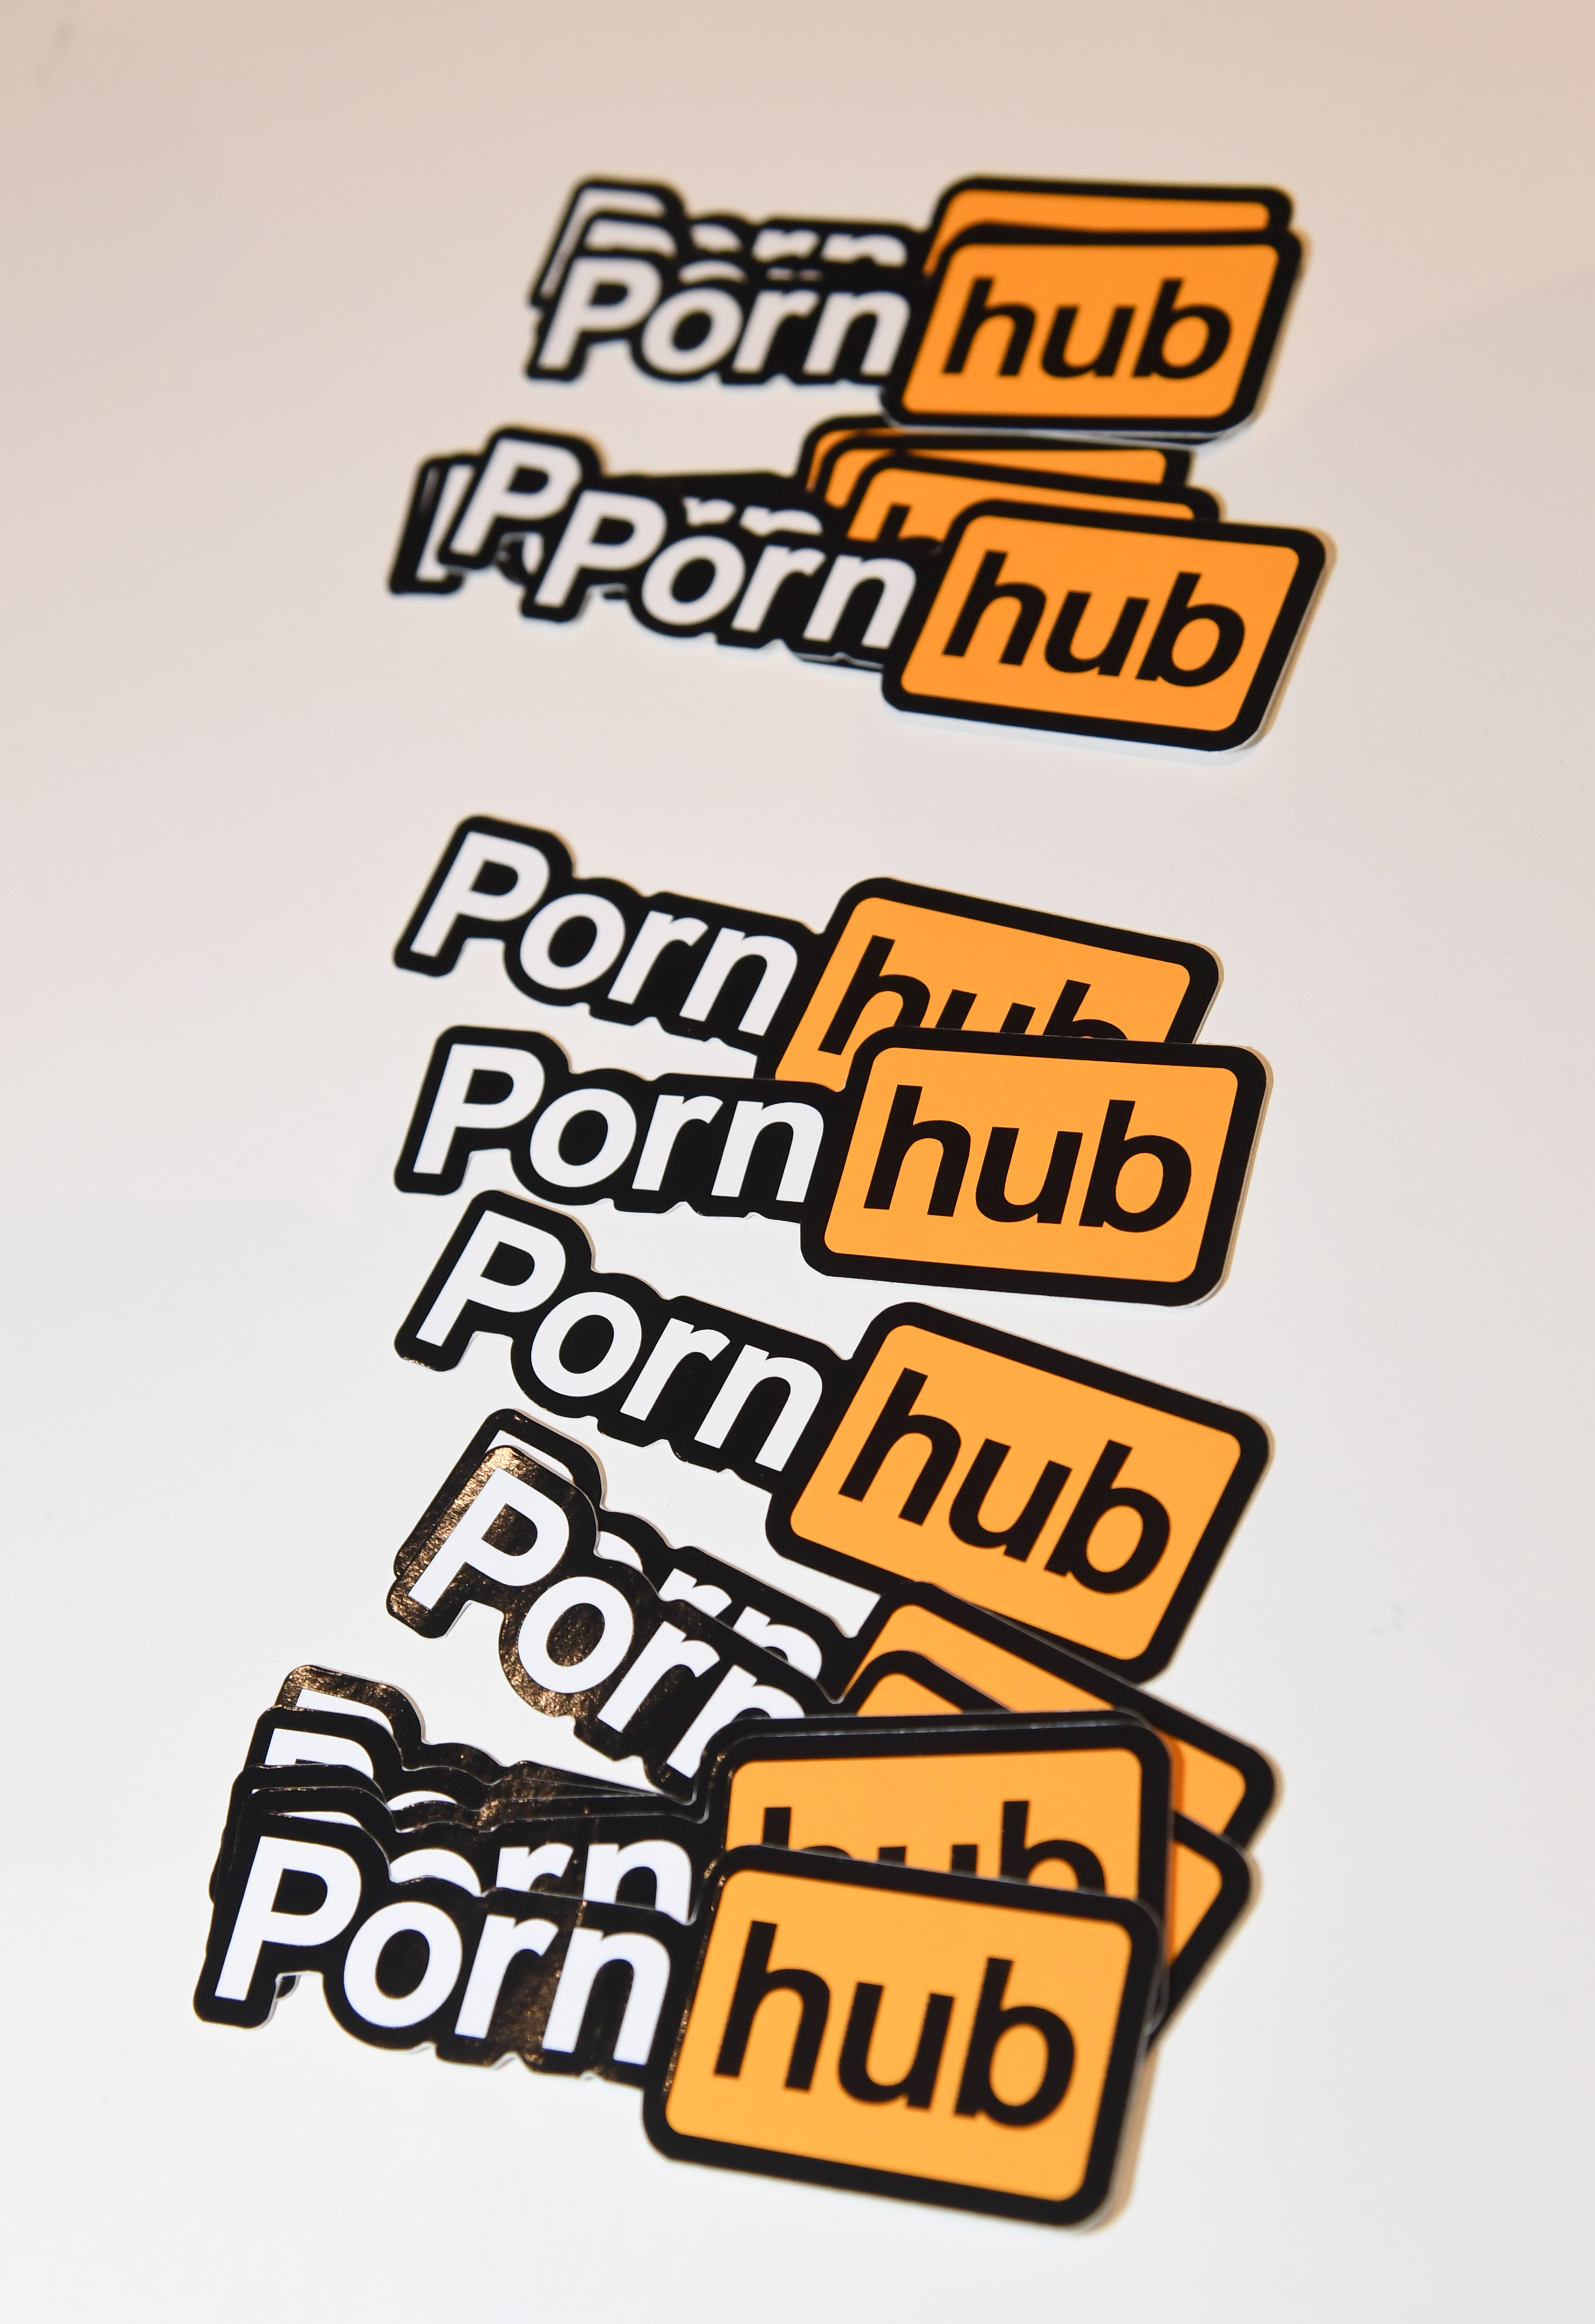 Probhub - Pornhub Just Purged All Unverified Content From the Platform